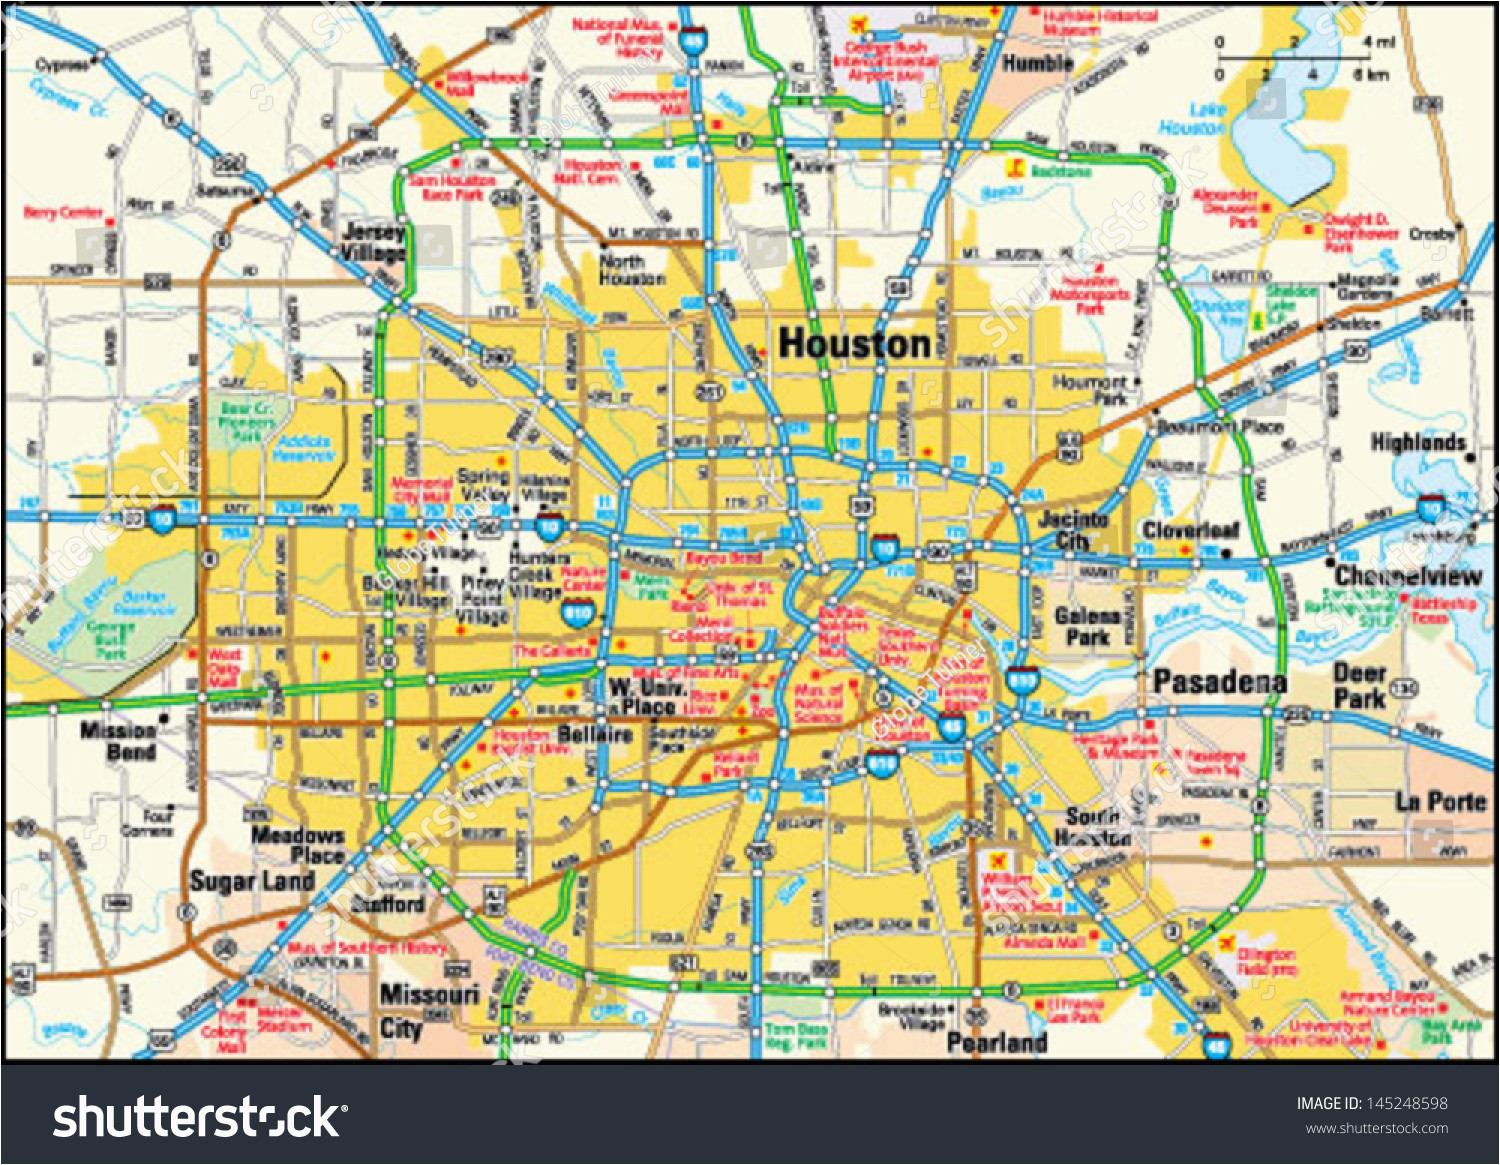 Map Of Houston Texas Zip Codes Houston Texas area Map Business Ideas 2013